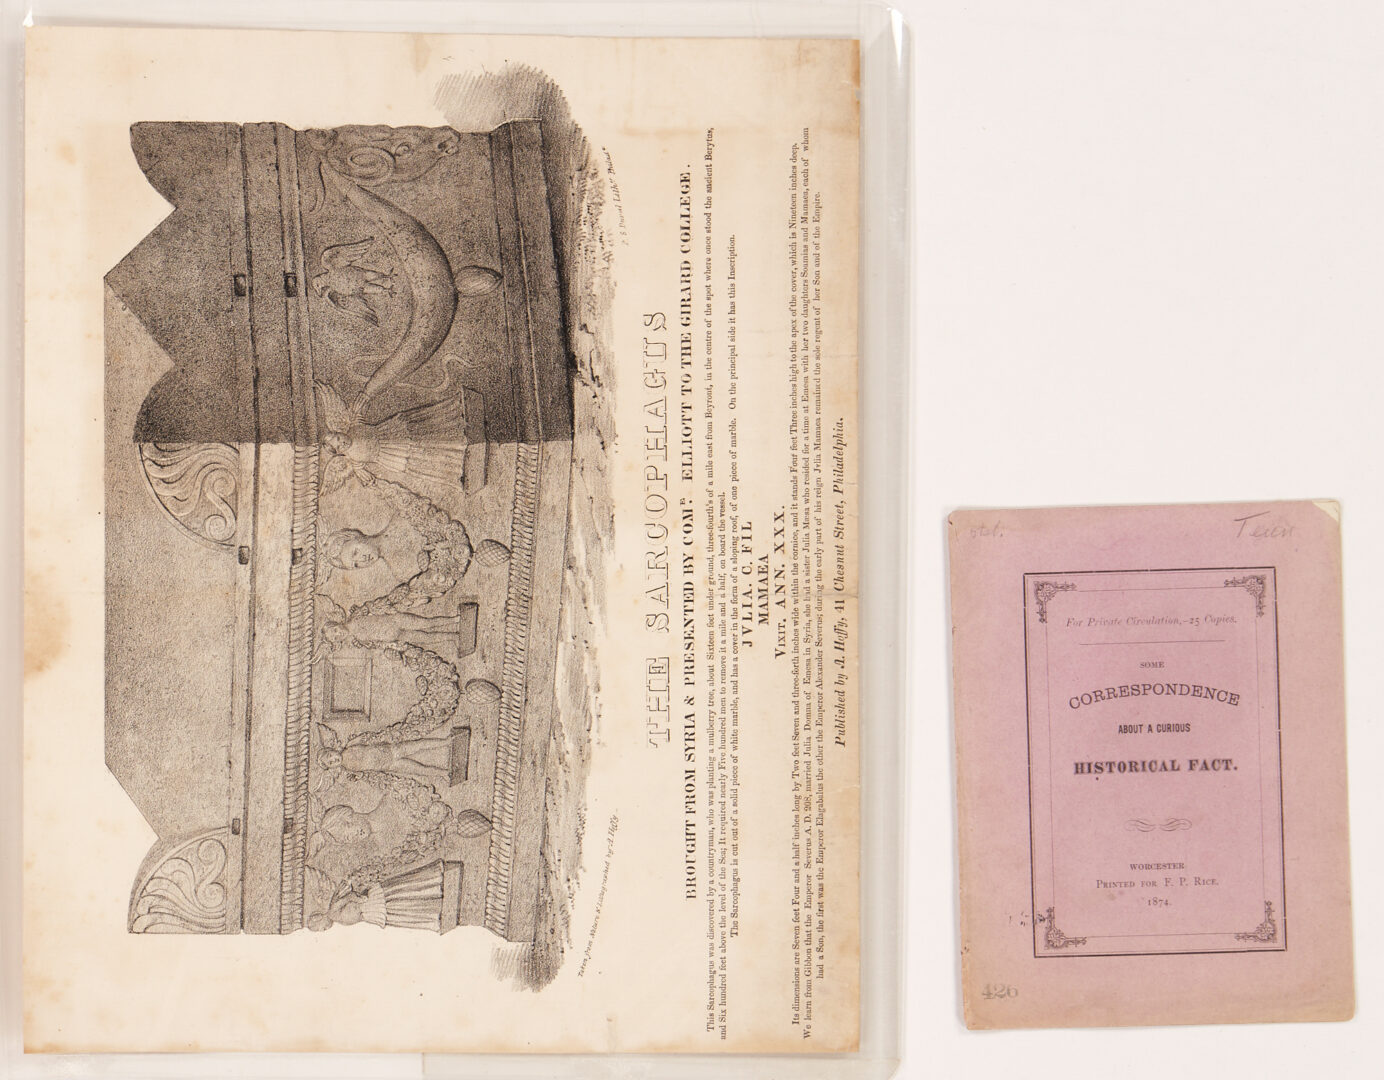 Lot 882: Cdre. Jesse D. Elliott ALS plus Andrew Jackson related Sarcophagus Print